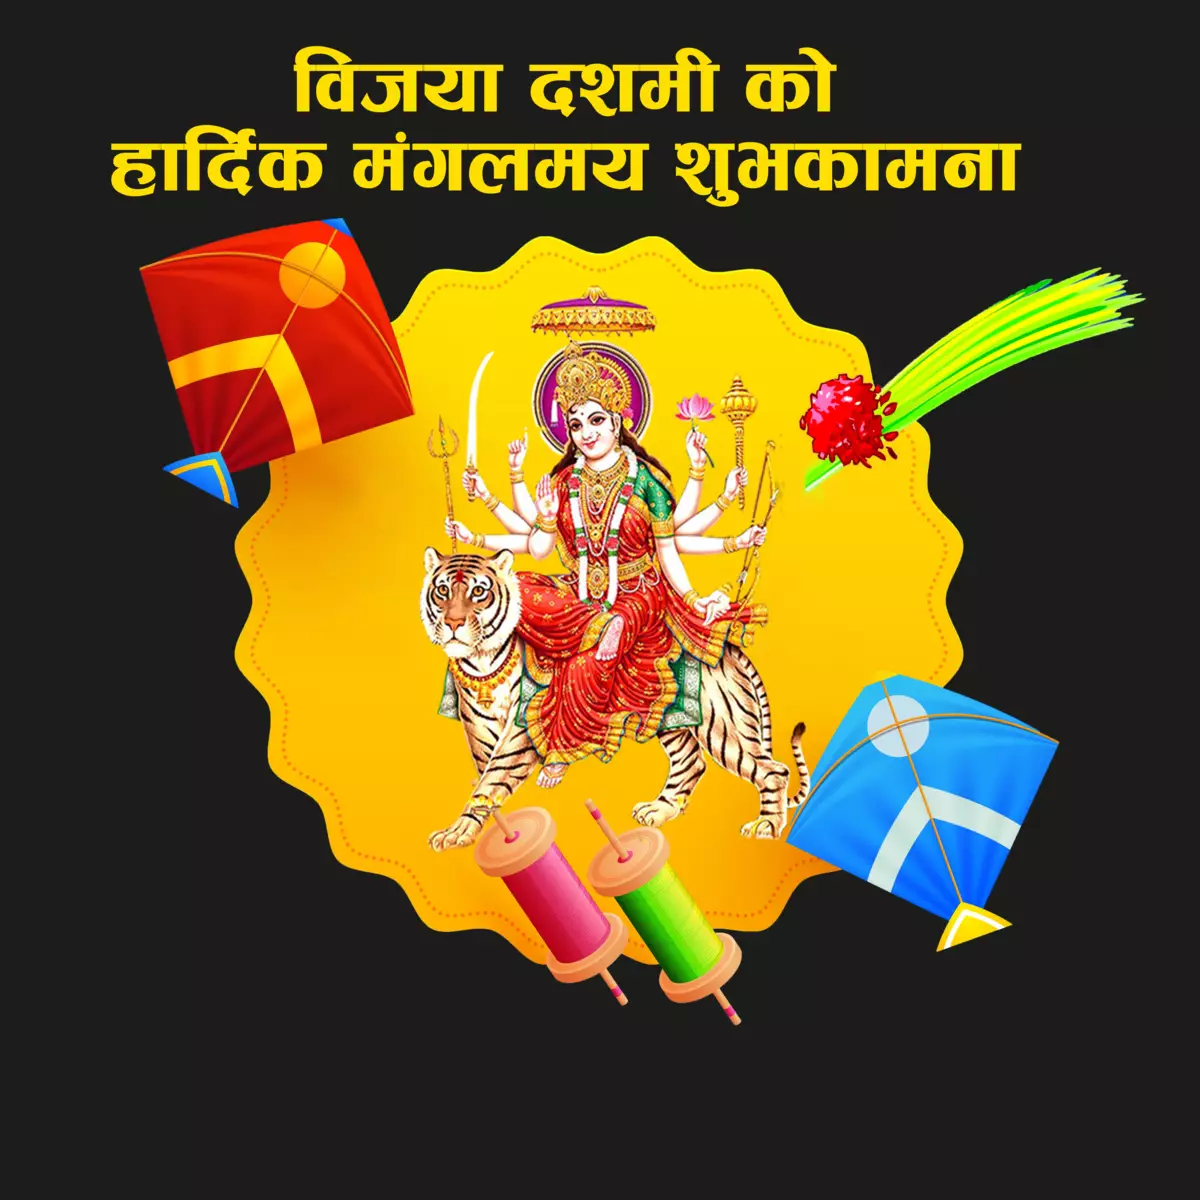 Dashain Greeting Card and social media banner design